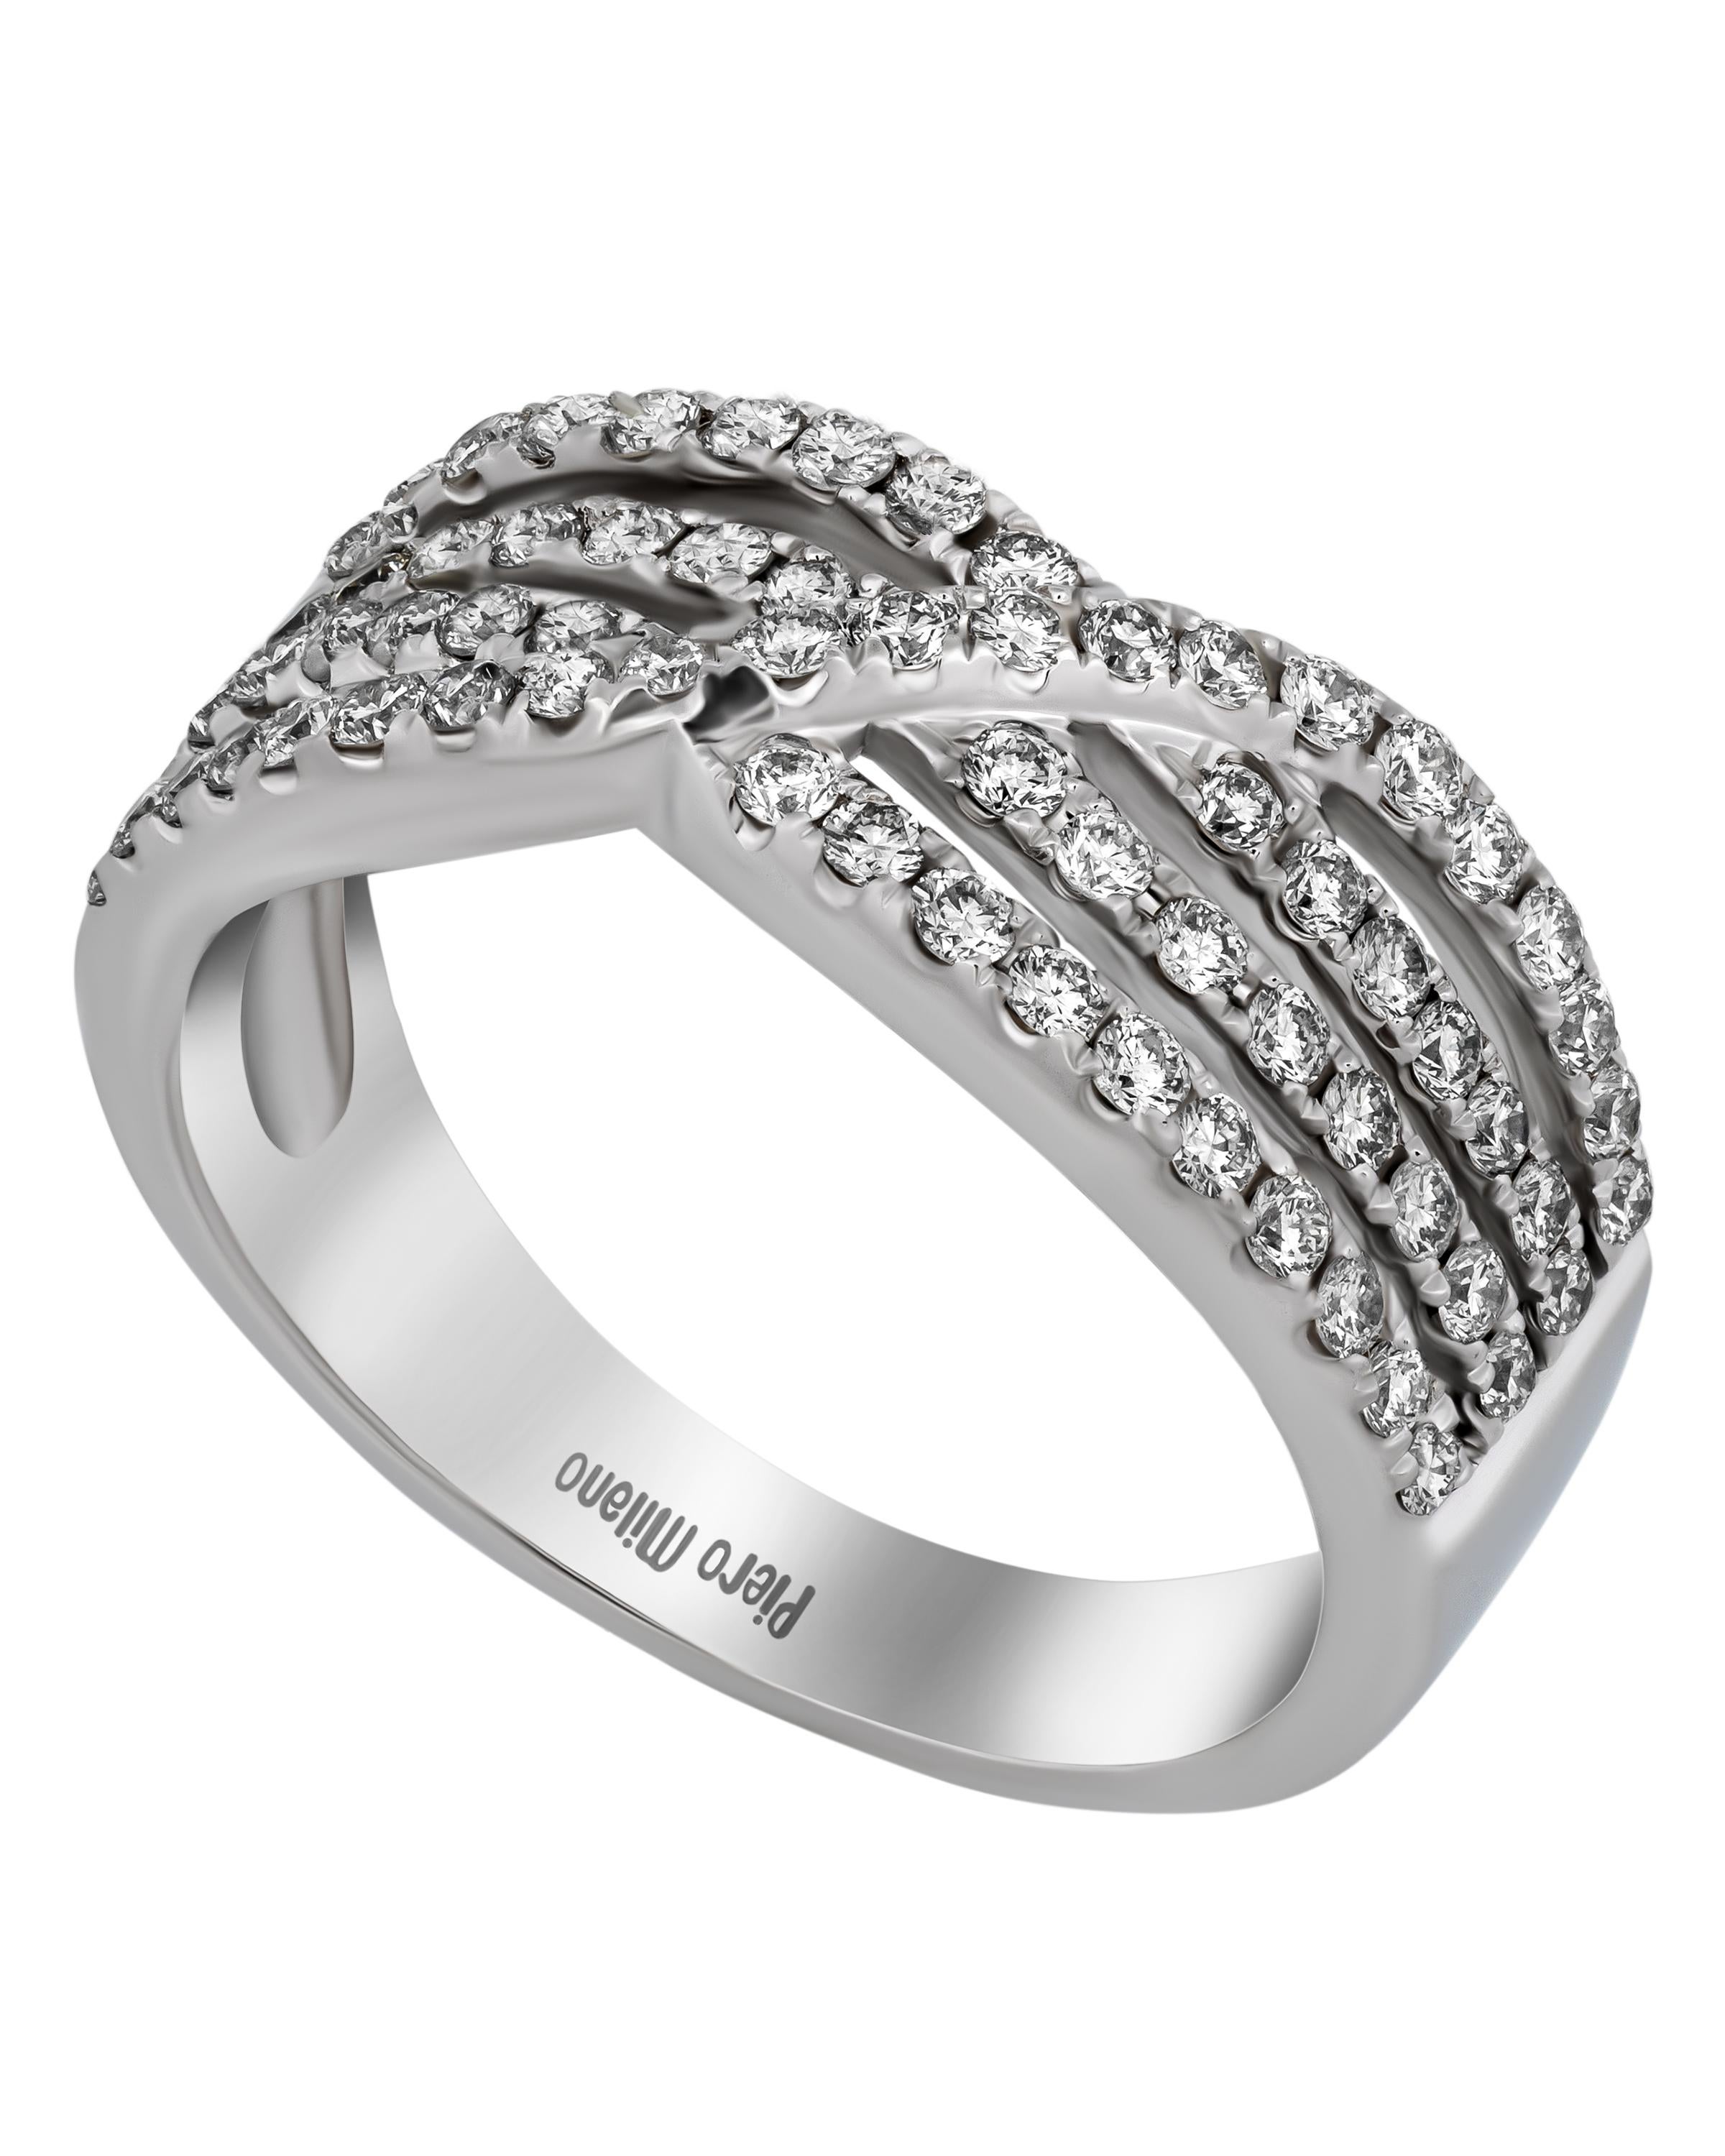 Contemporary Piero Milano 18K White Gold Diamond Ring Sz 5.75 For Sale